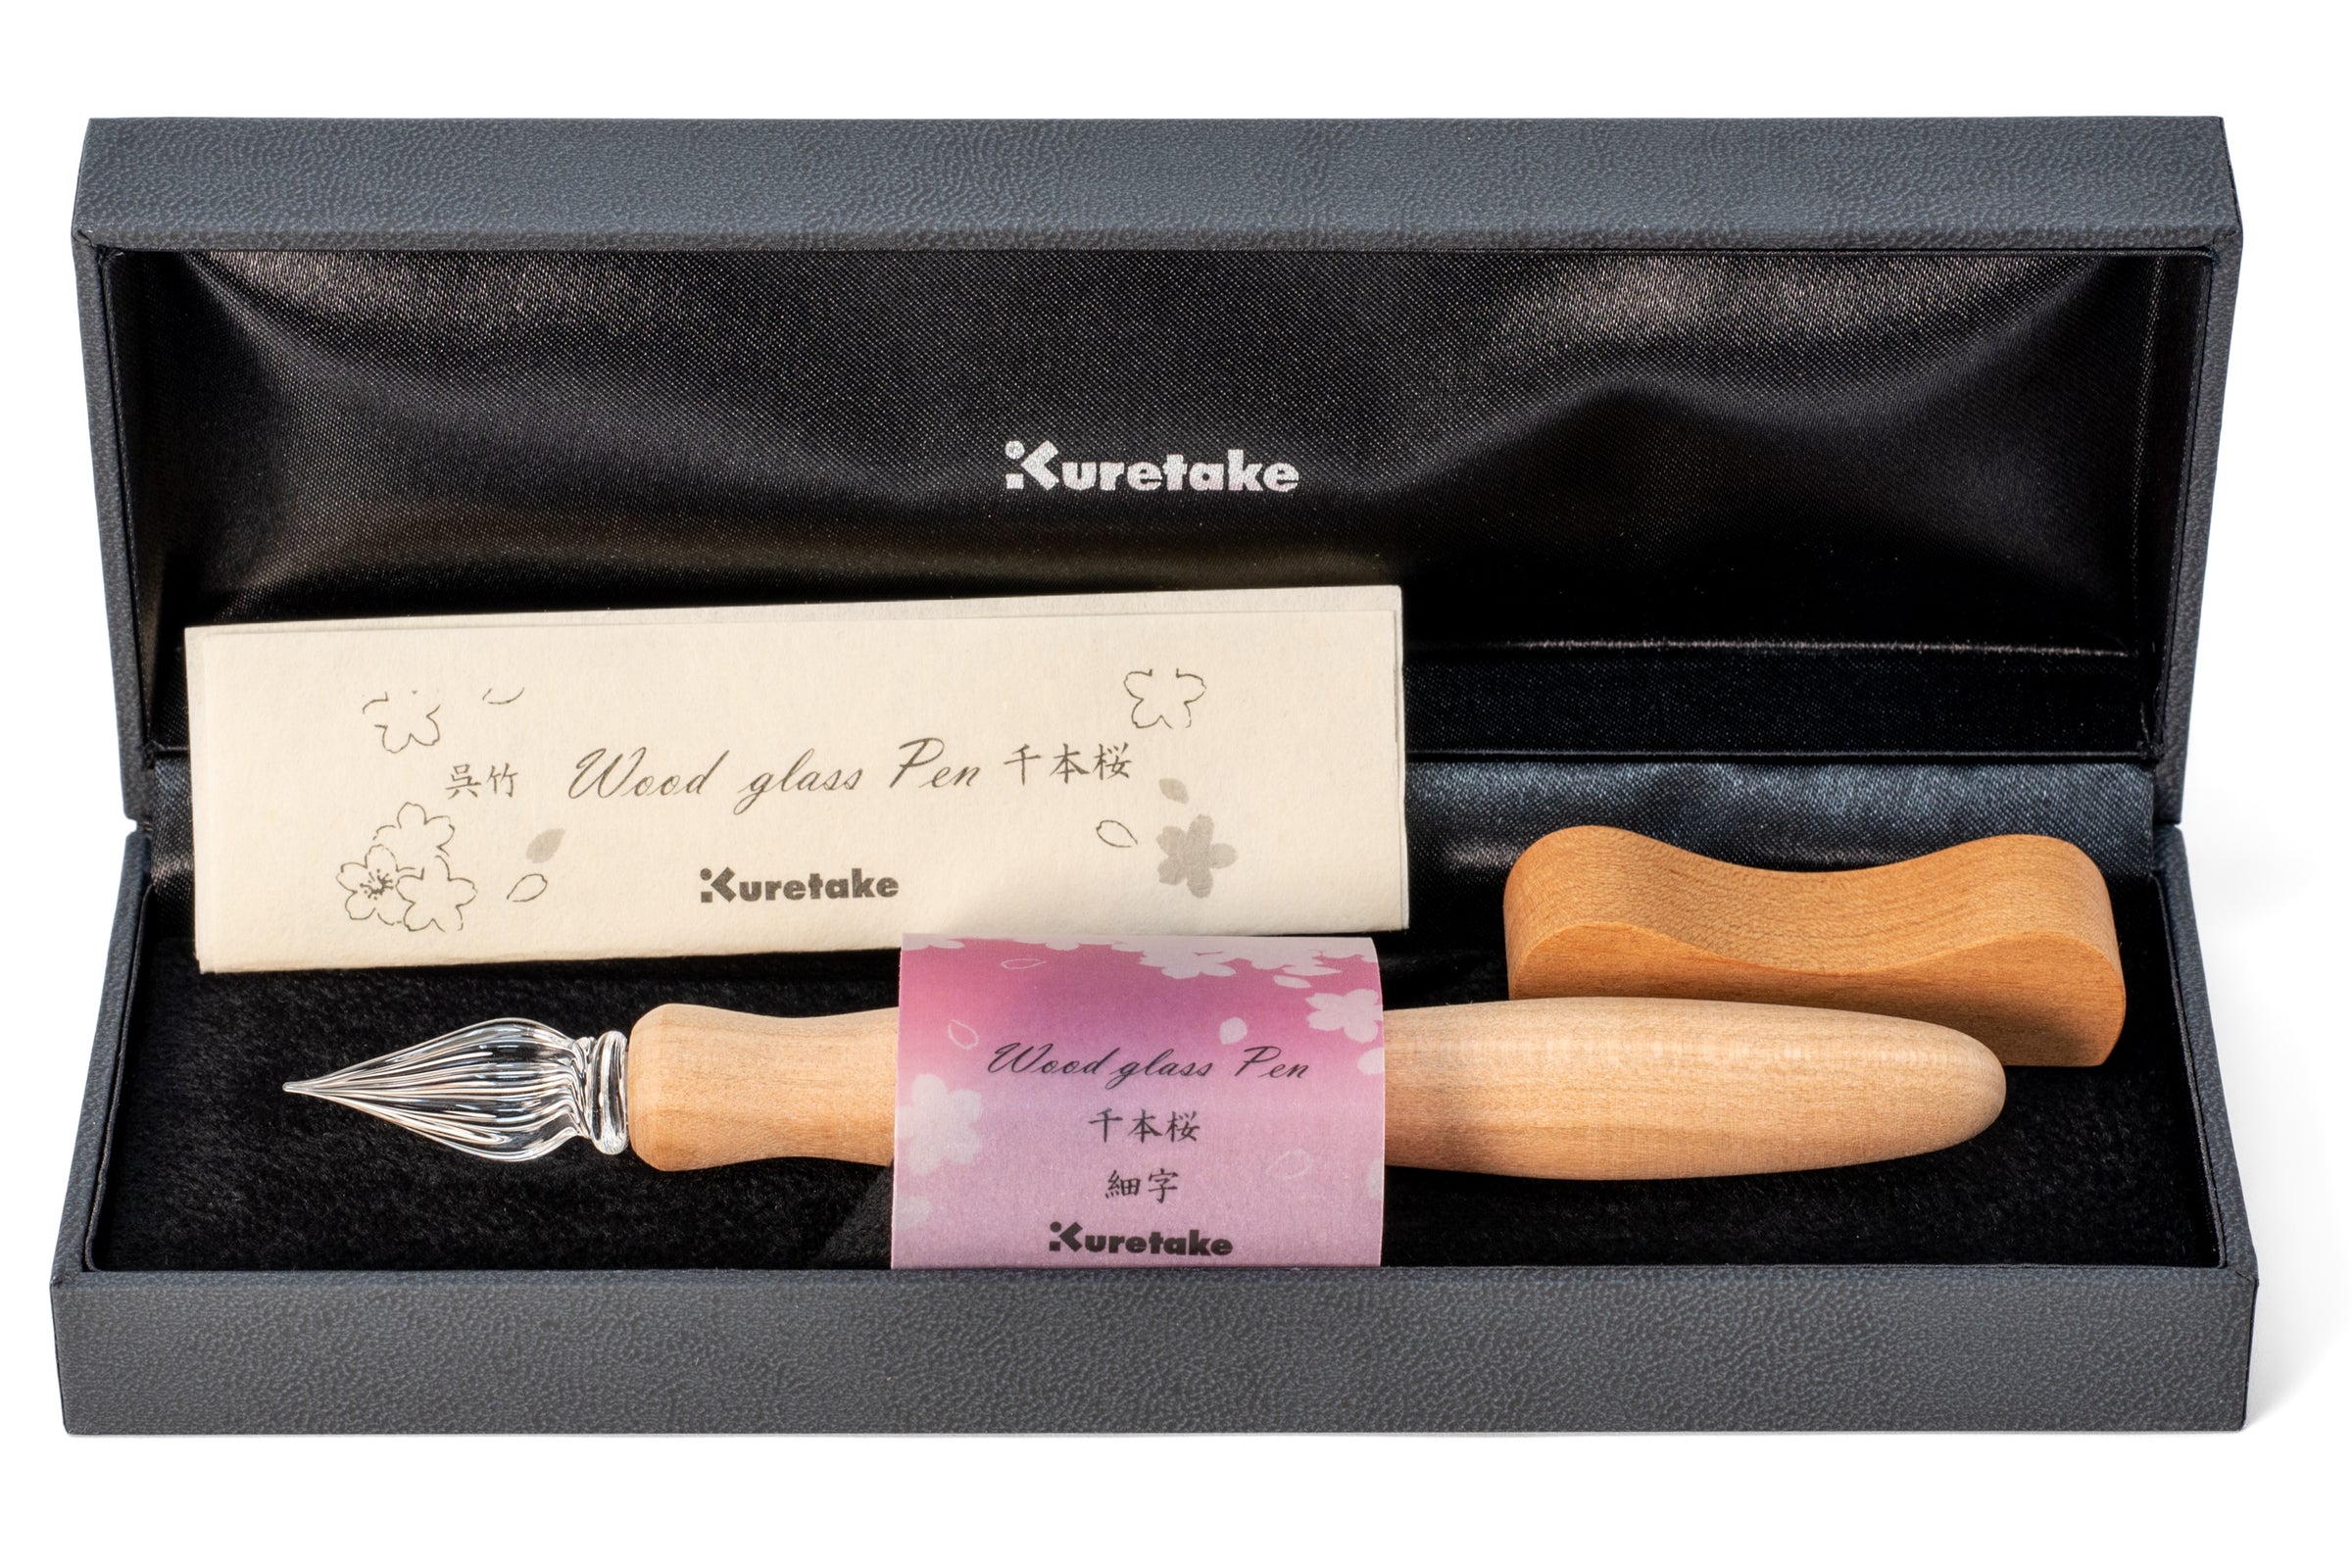 Glaze 3D Pen Sets Review #SakuraOfAmerica #Glaze3DPens #Zentangle